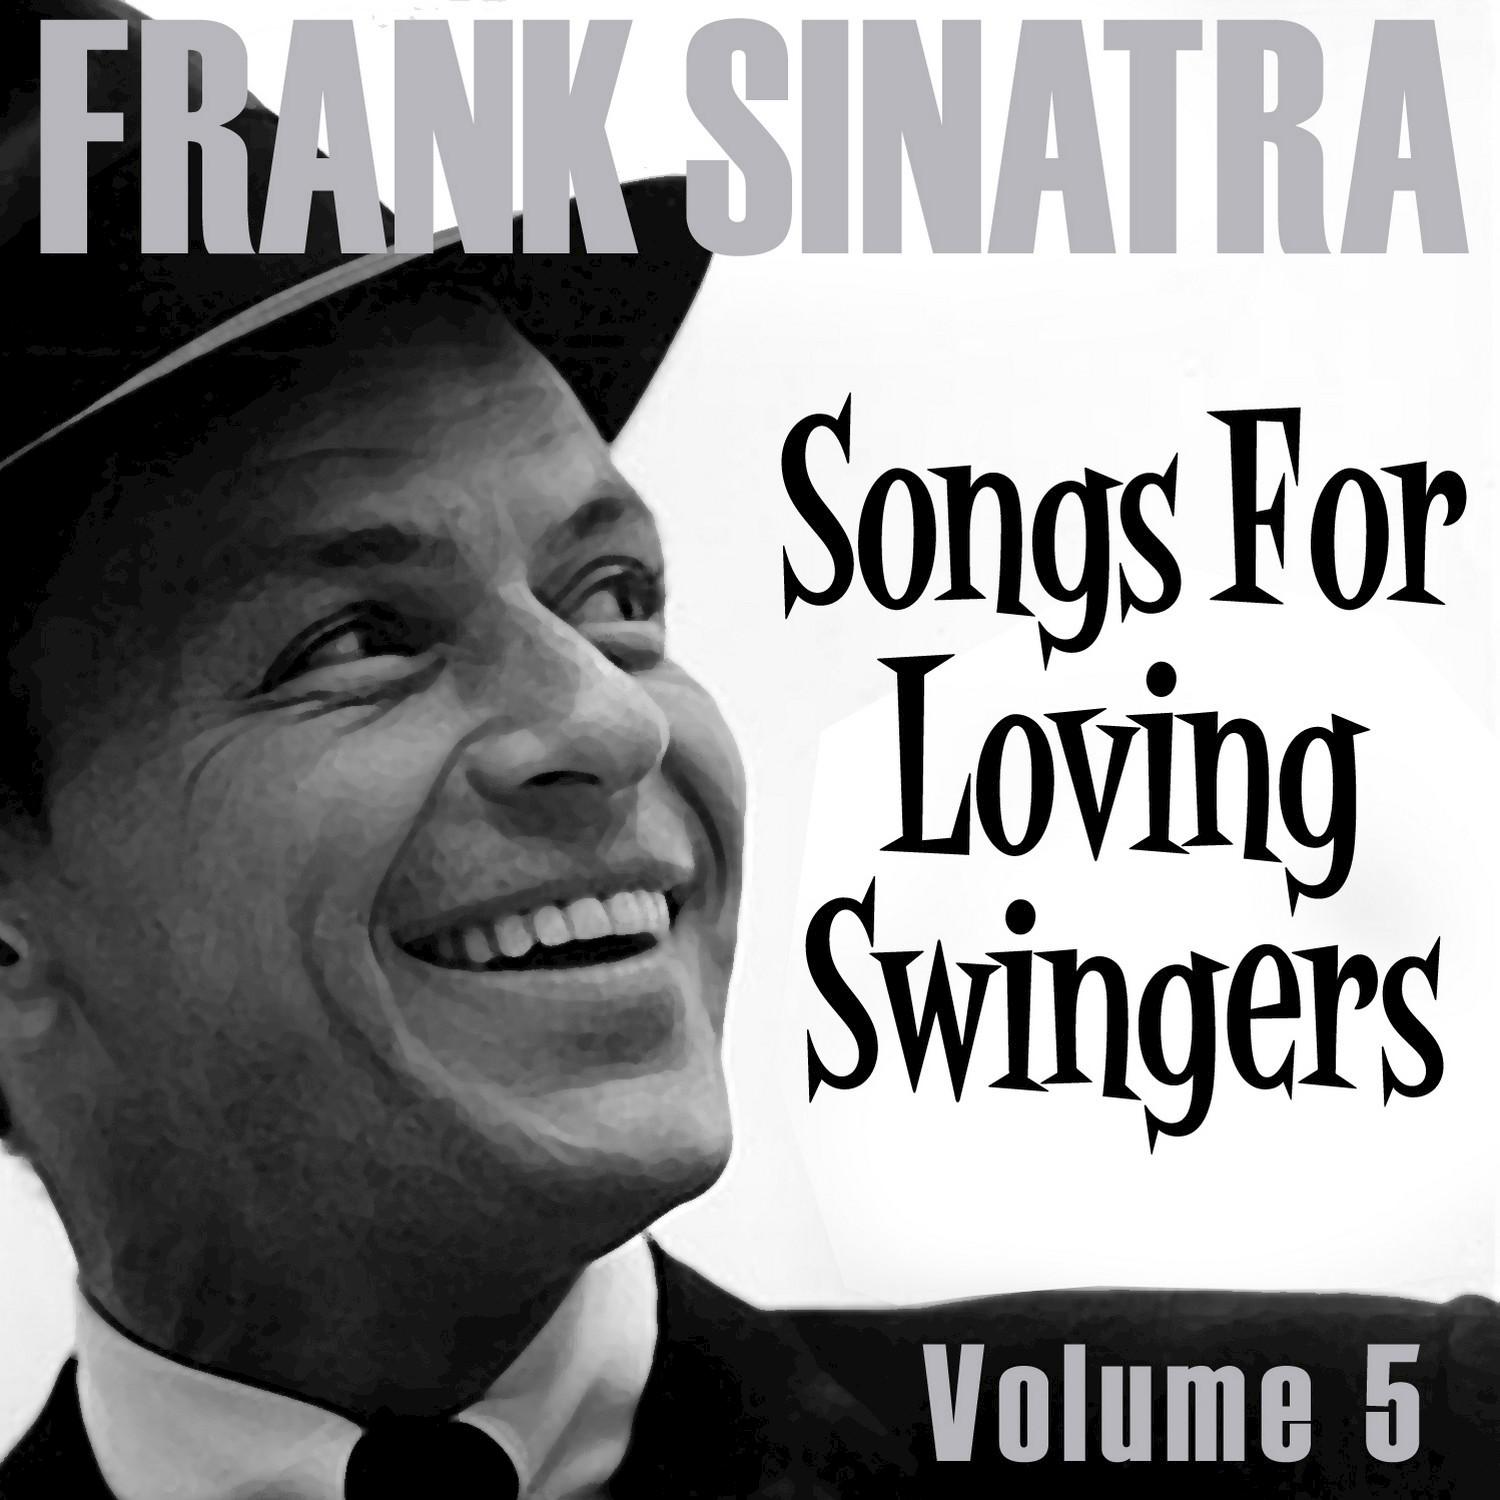 Frank Sinatra - Songs for Loving Swingers, Vol. 5